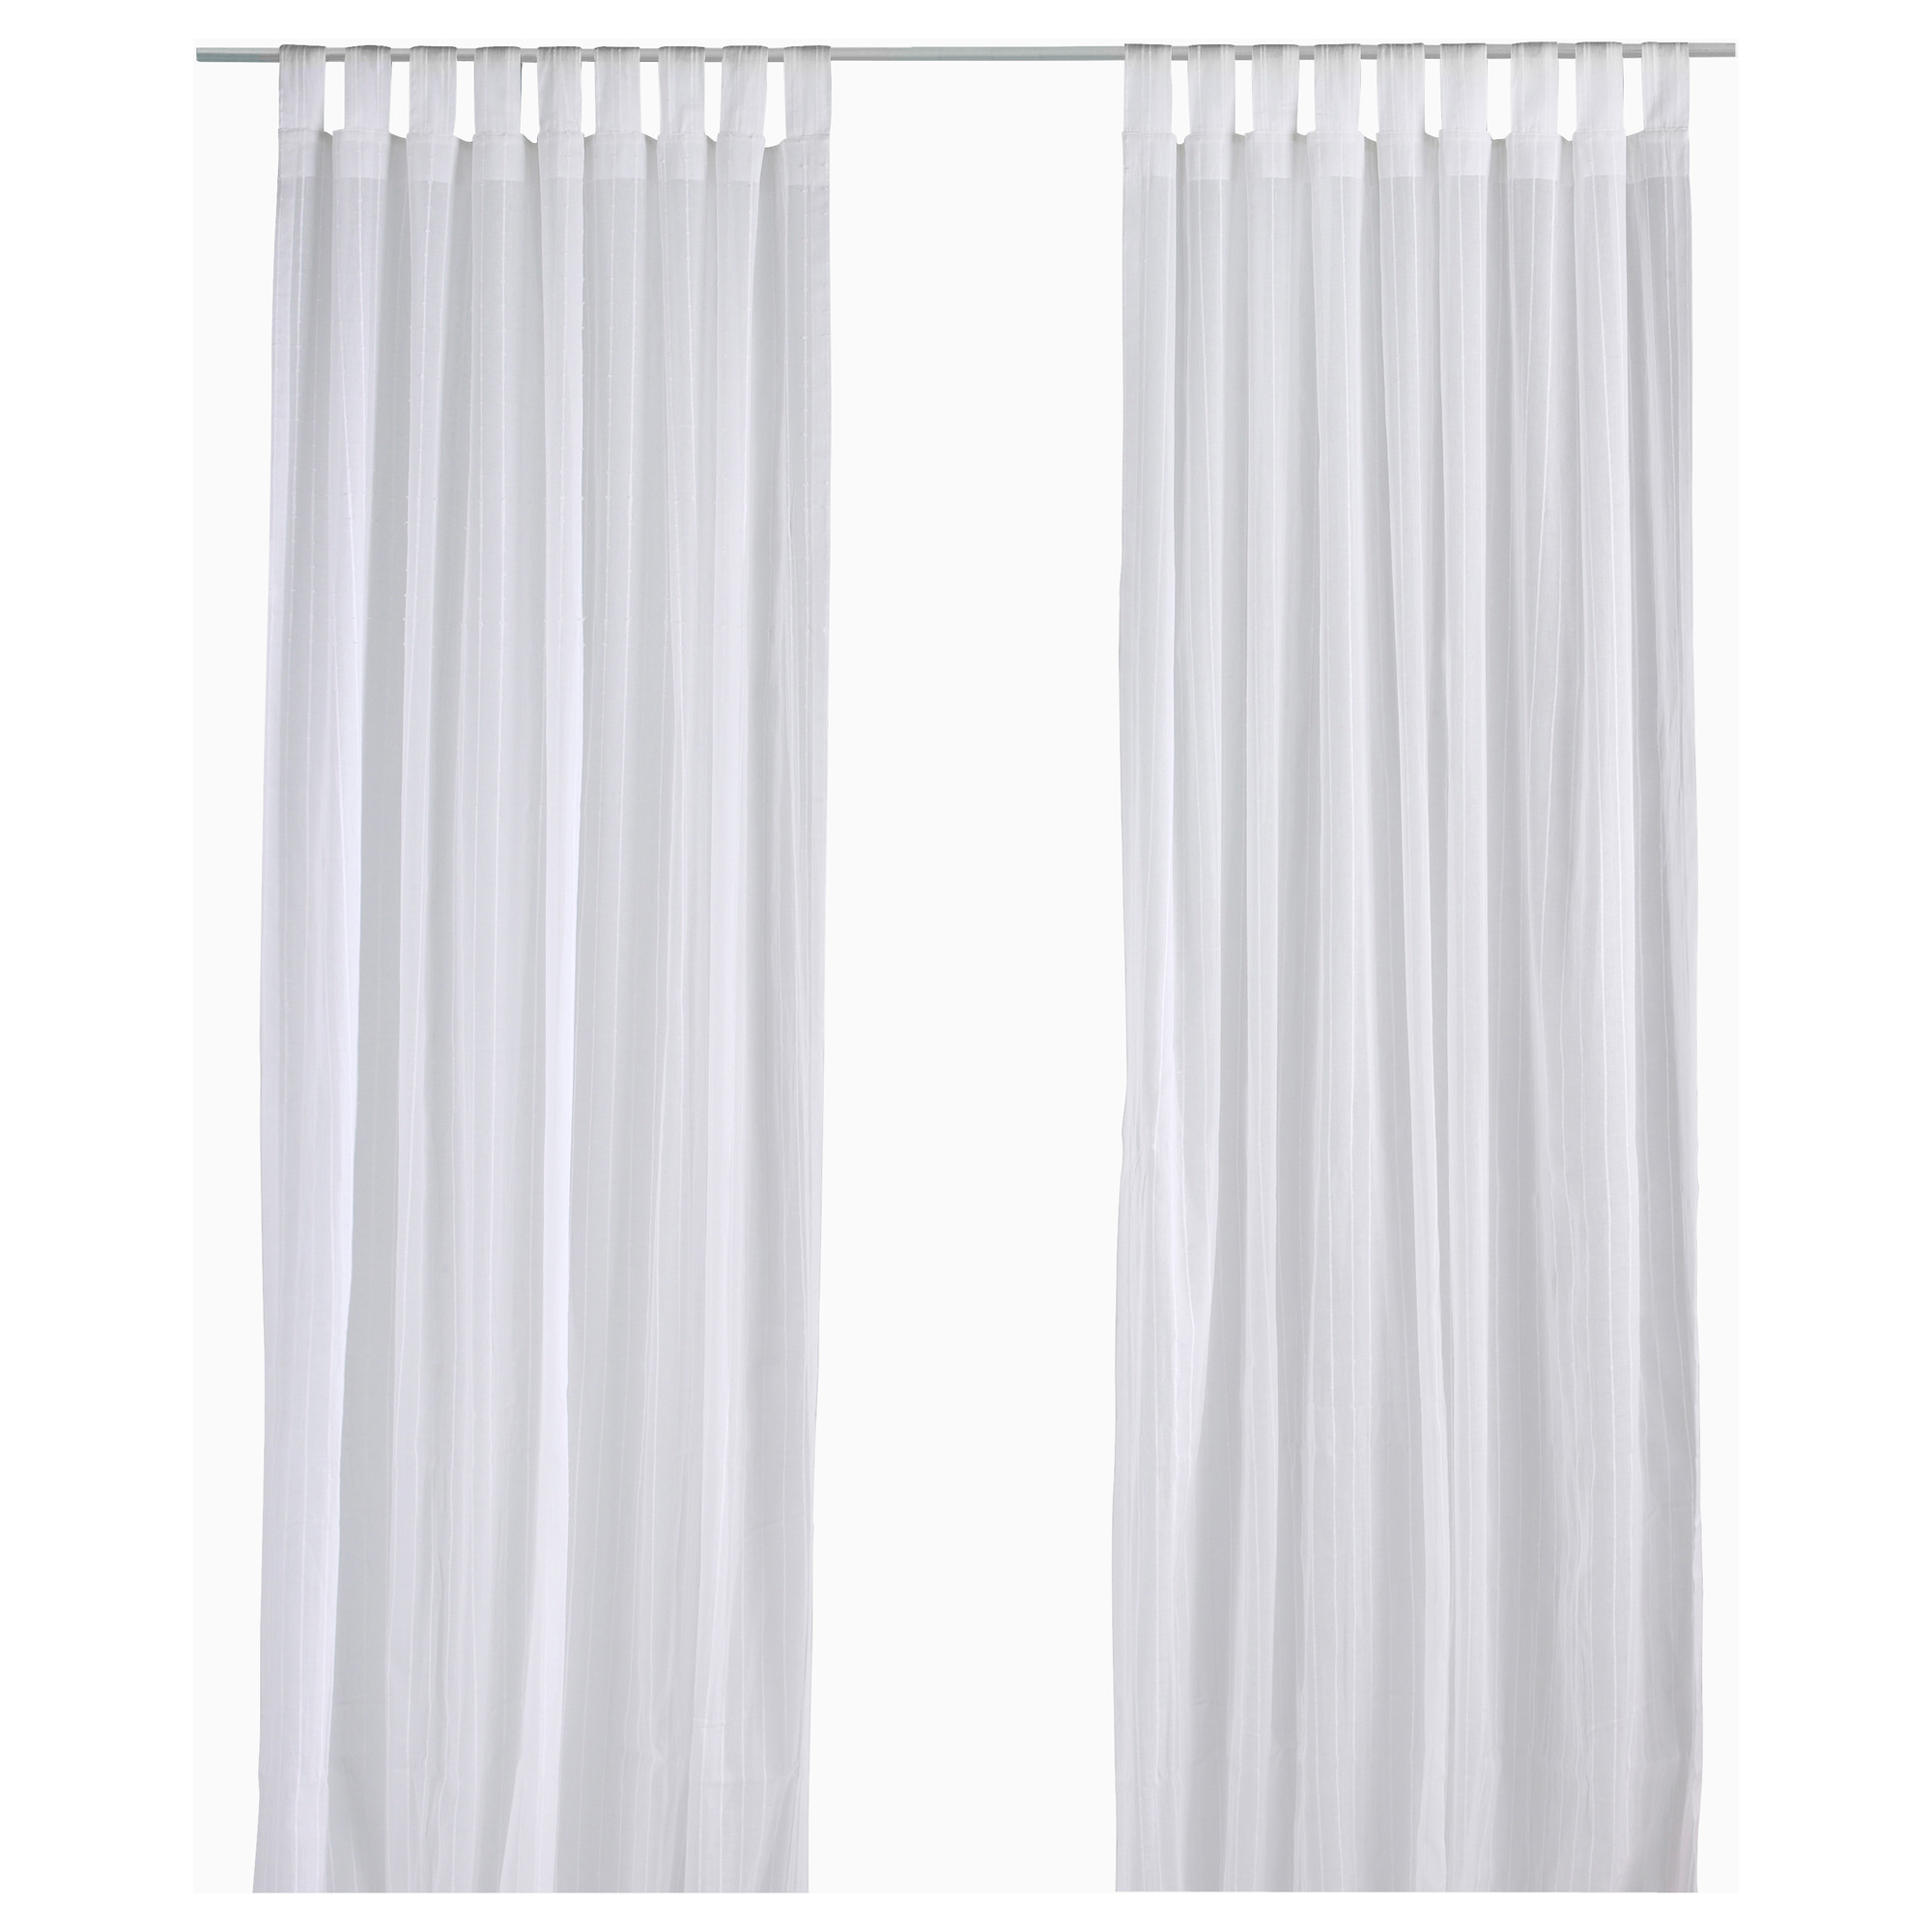 MATILDA sheer curtains, 1 pair